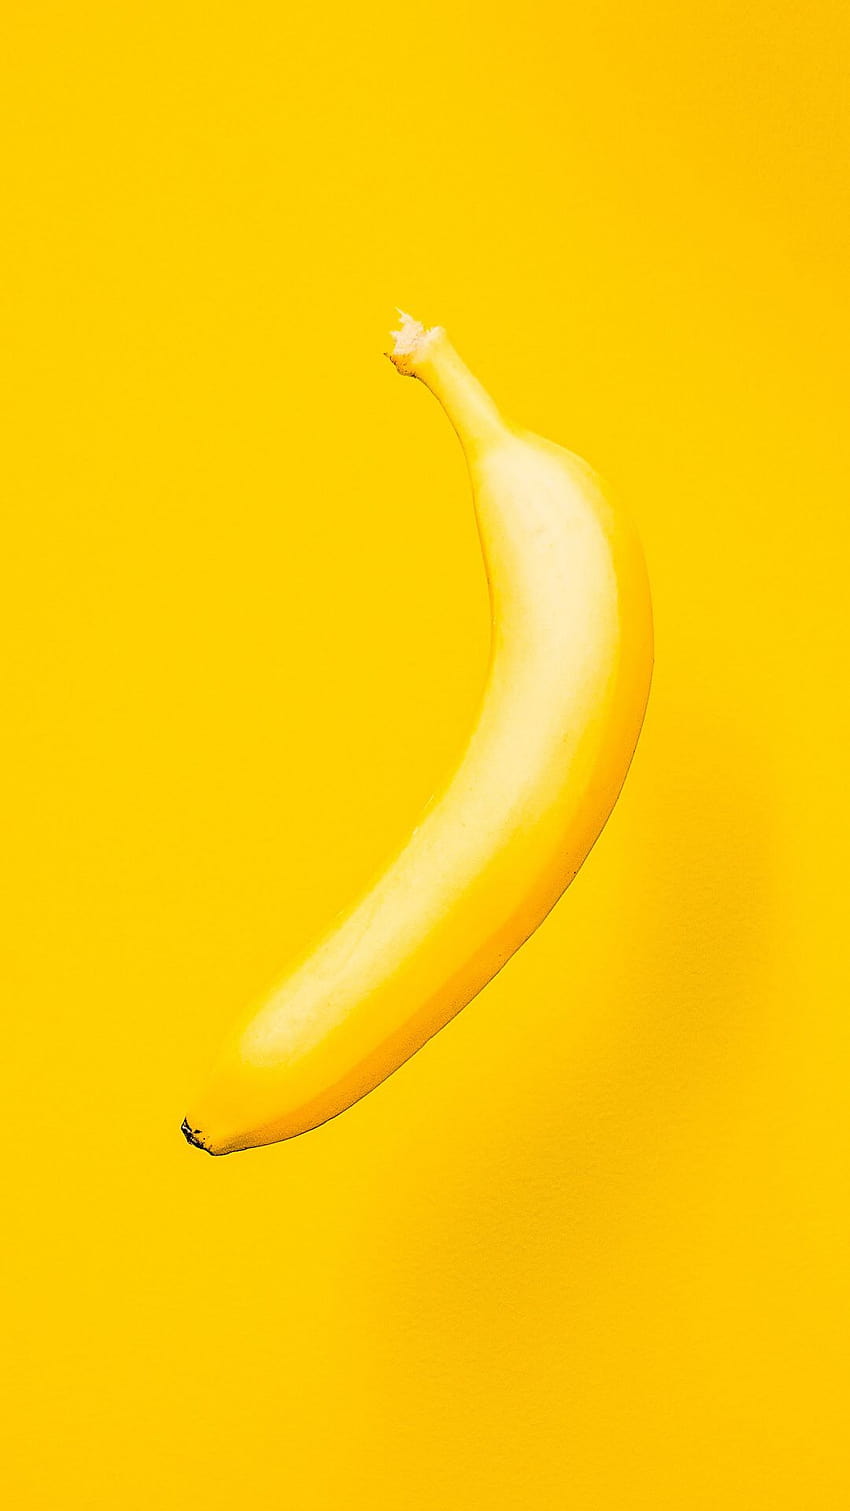 A single banana on a yellow background - Banana